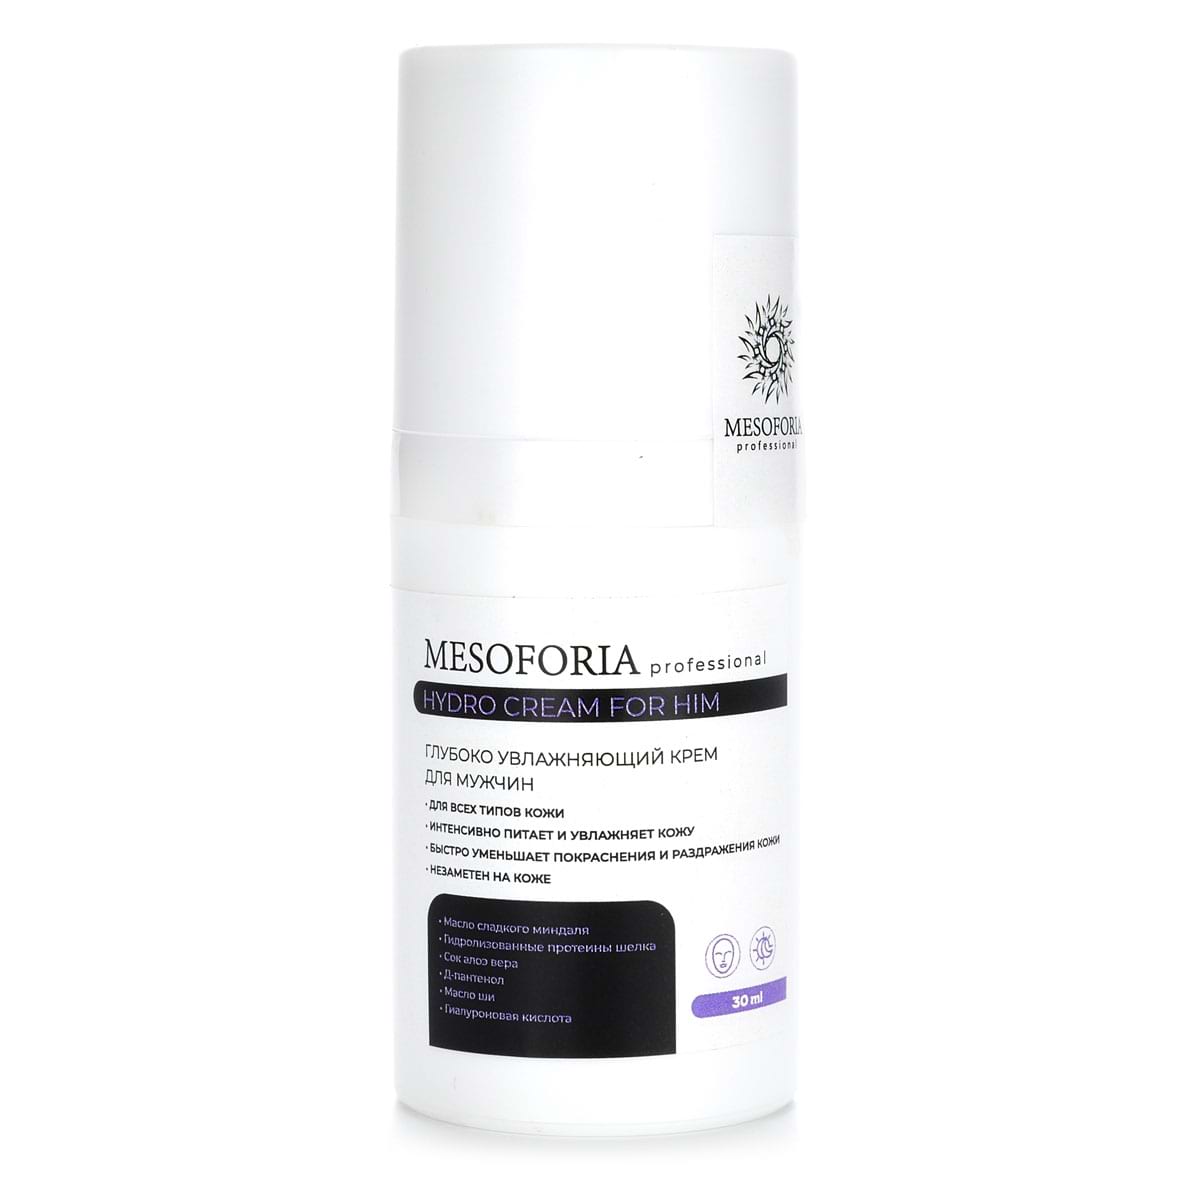 Hydro Cream For Him / Увлажняющий крем для мужчин, Mesoforia (Мезофория) – 30 мл